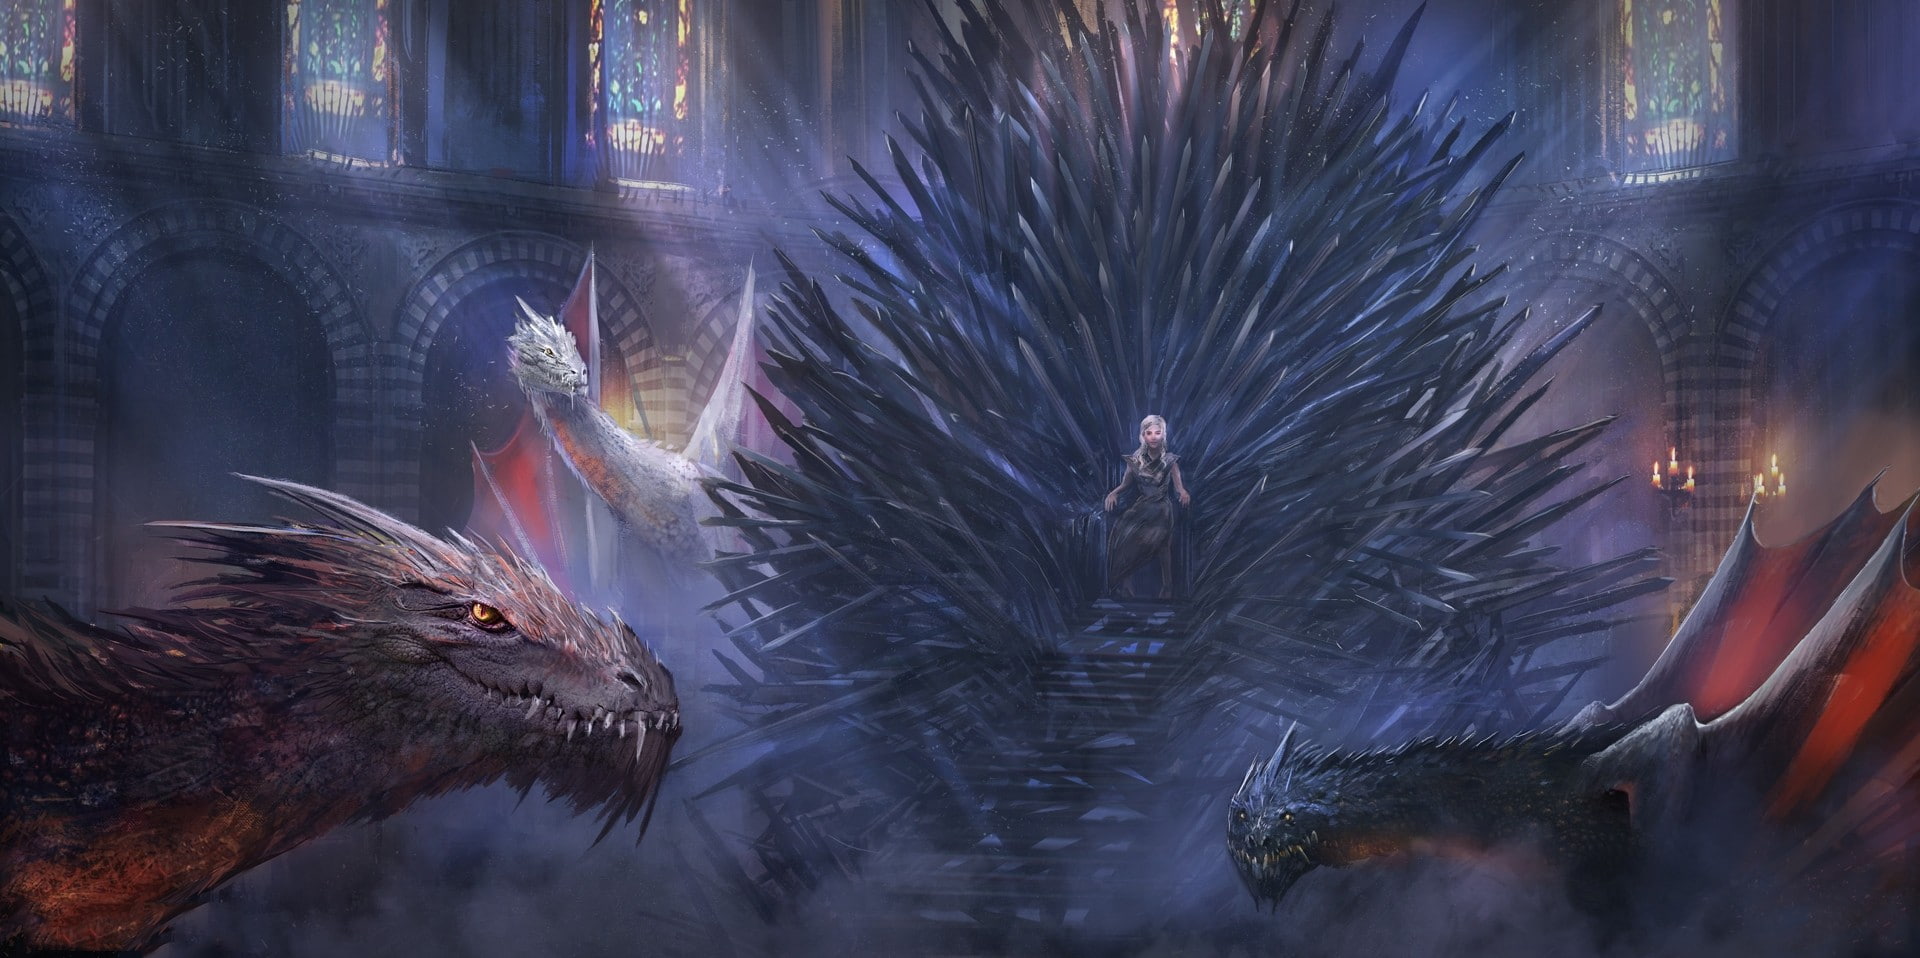 Iron Throne, Daenerys Targaryen, Game of Thrones, fantasy art